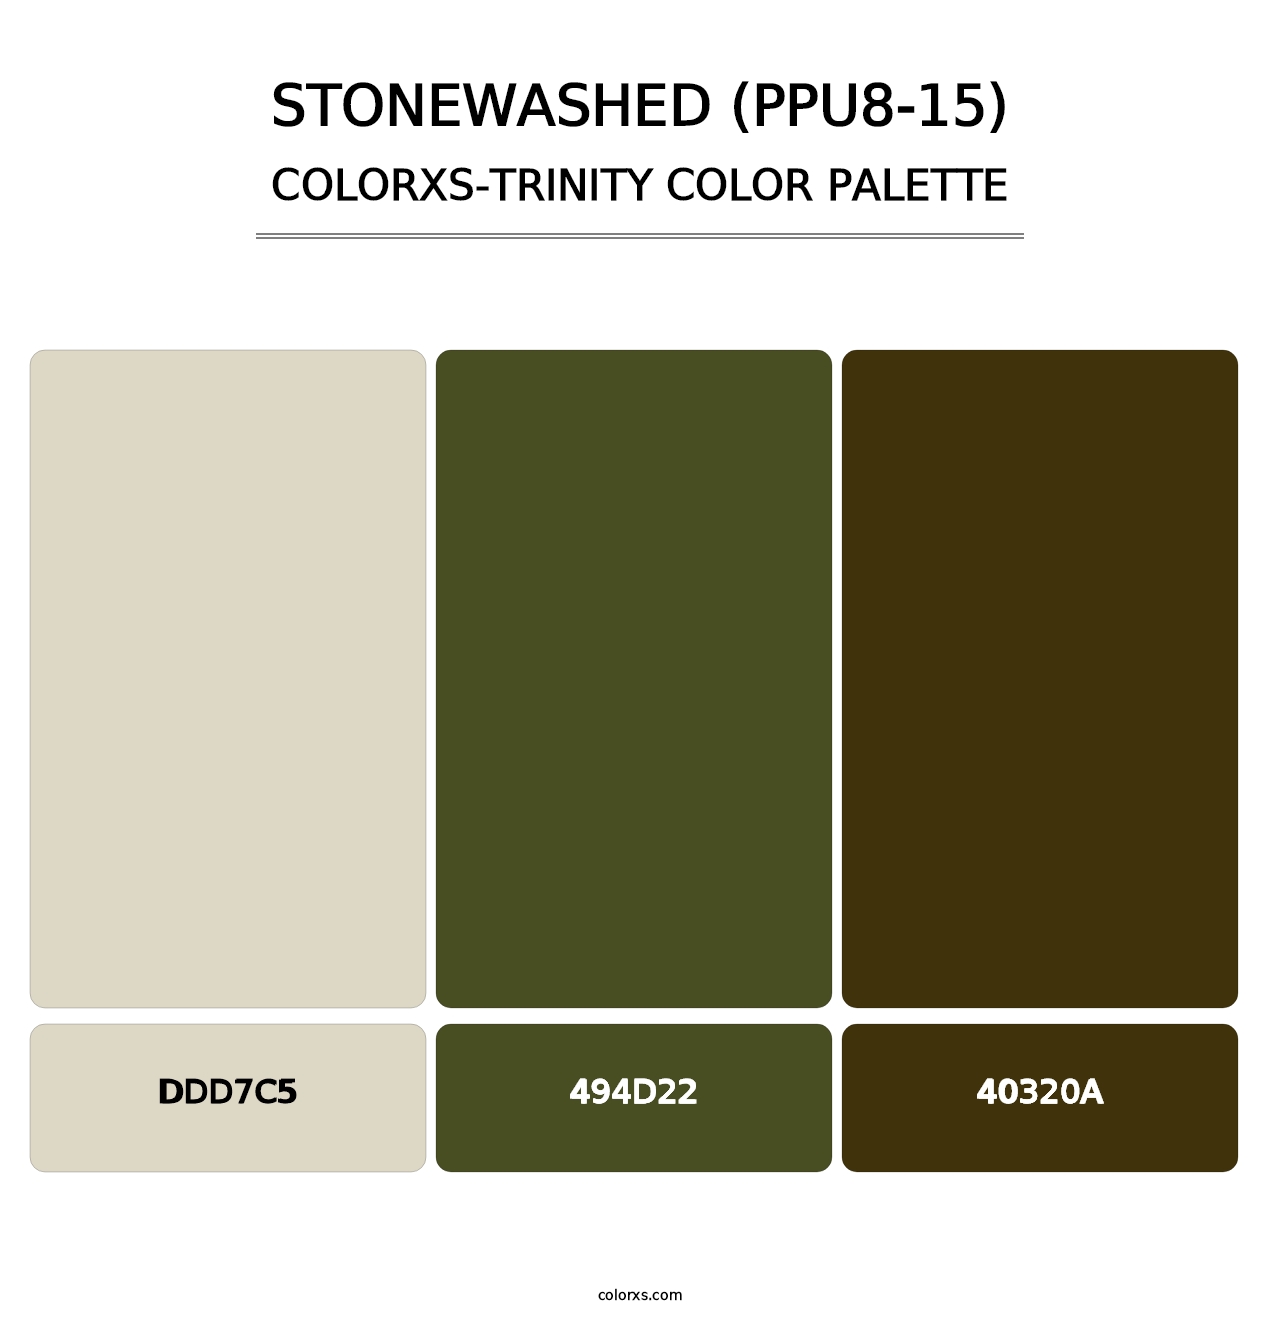 Stonewashed (PPU8-15) - Colorxs Trinity Palette